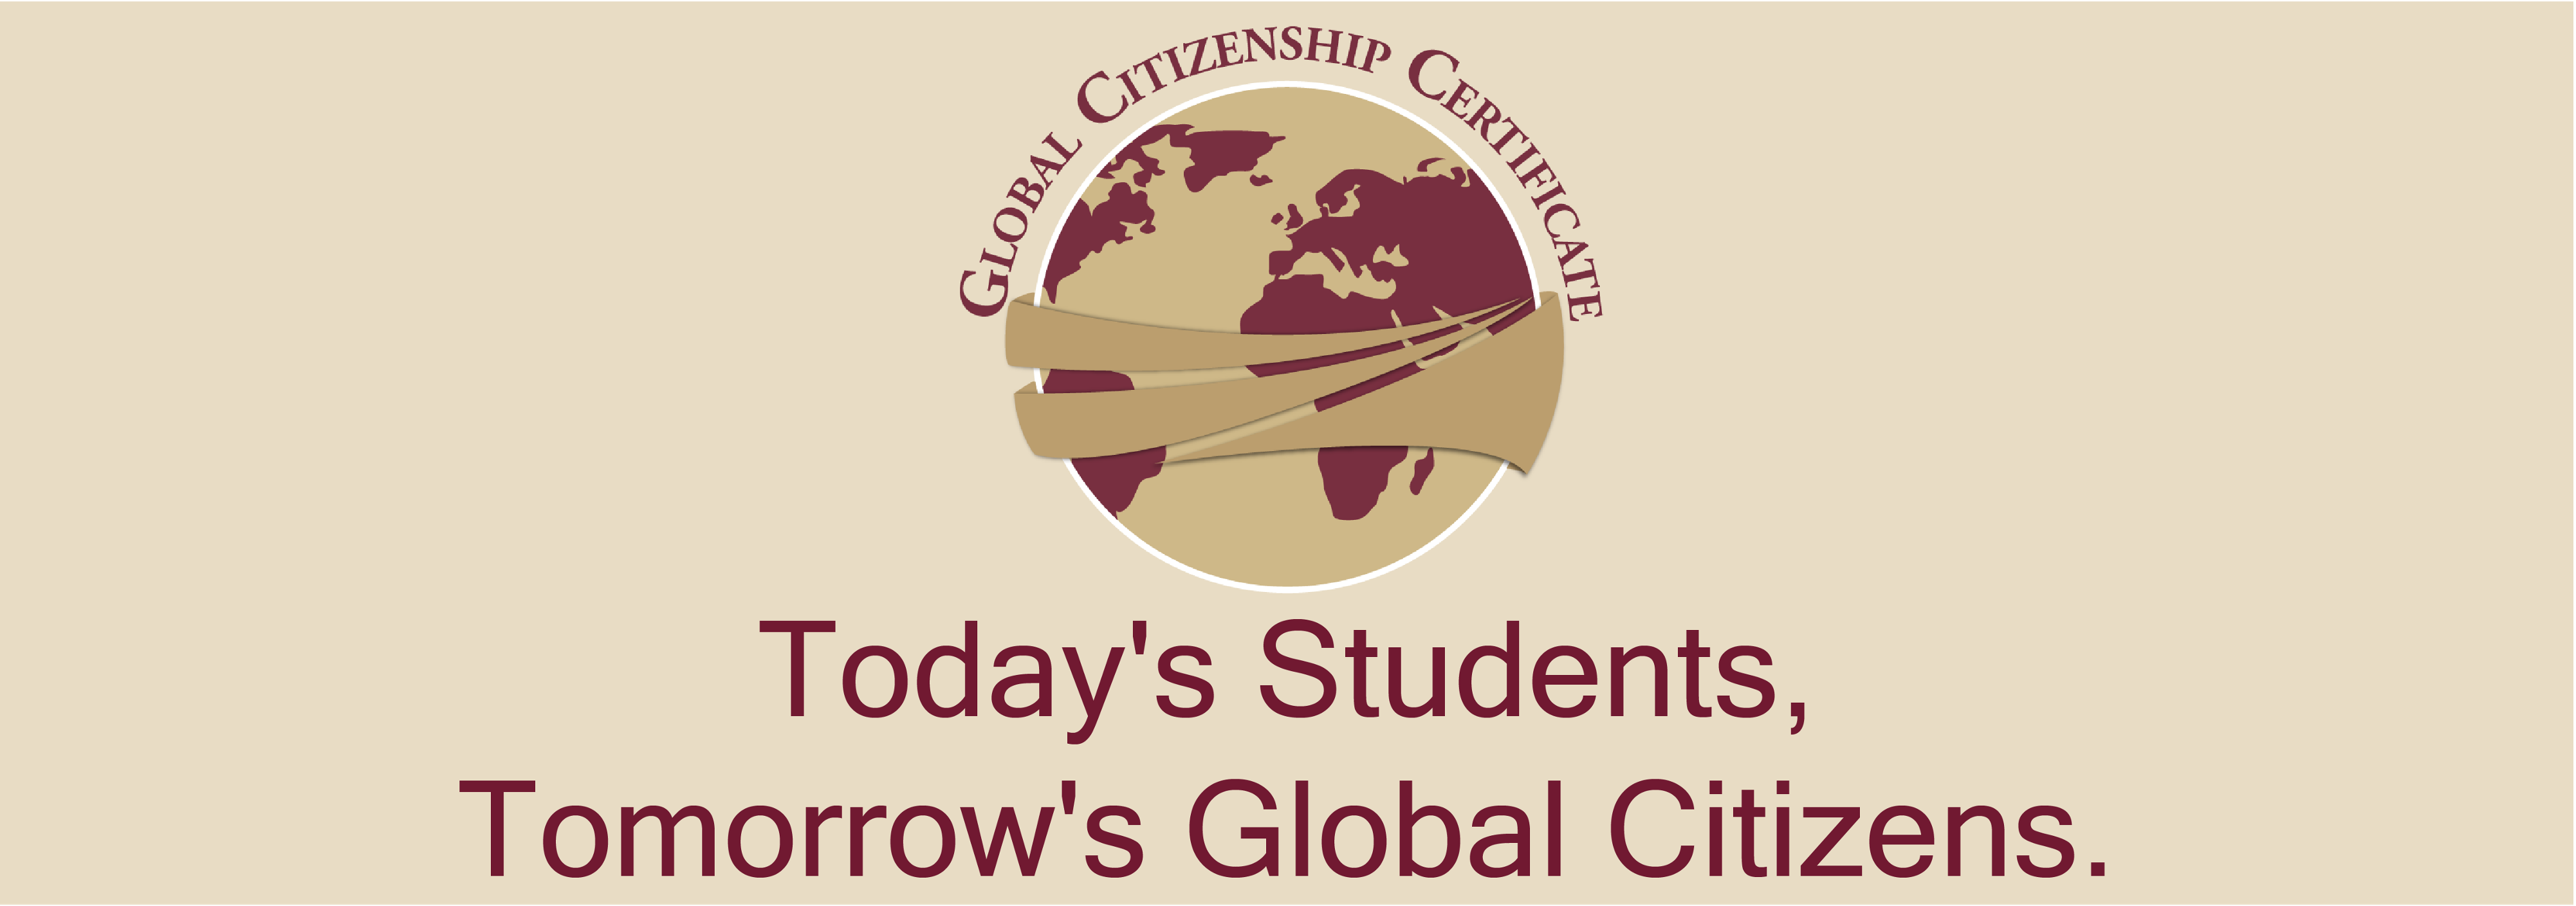 Global Citizenship Certificate Scholarship logo